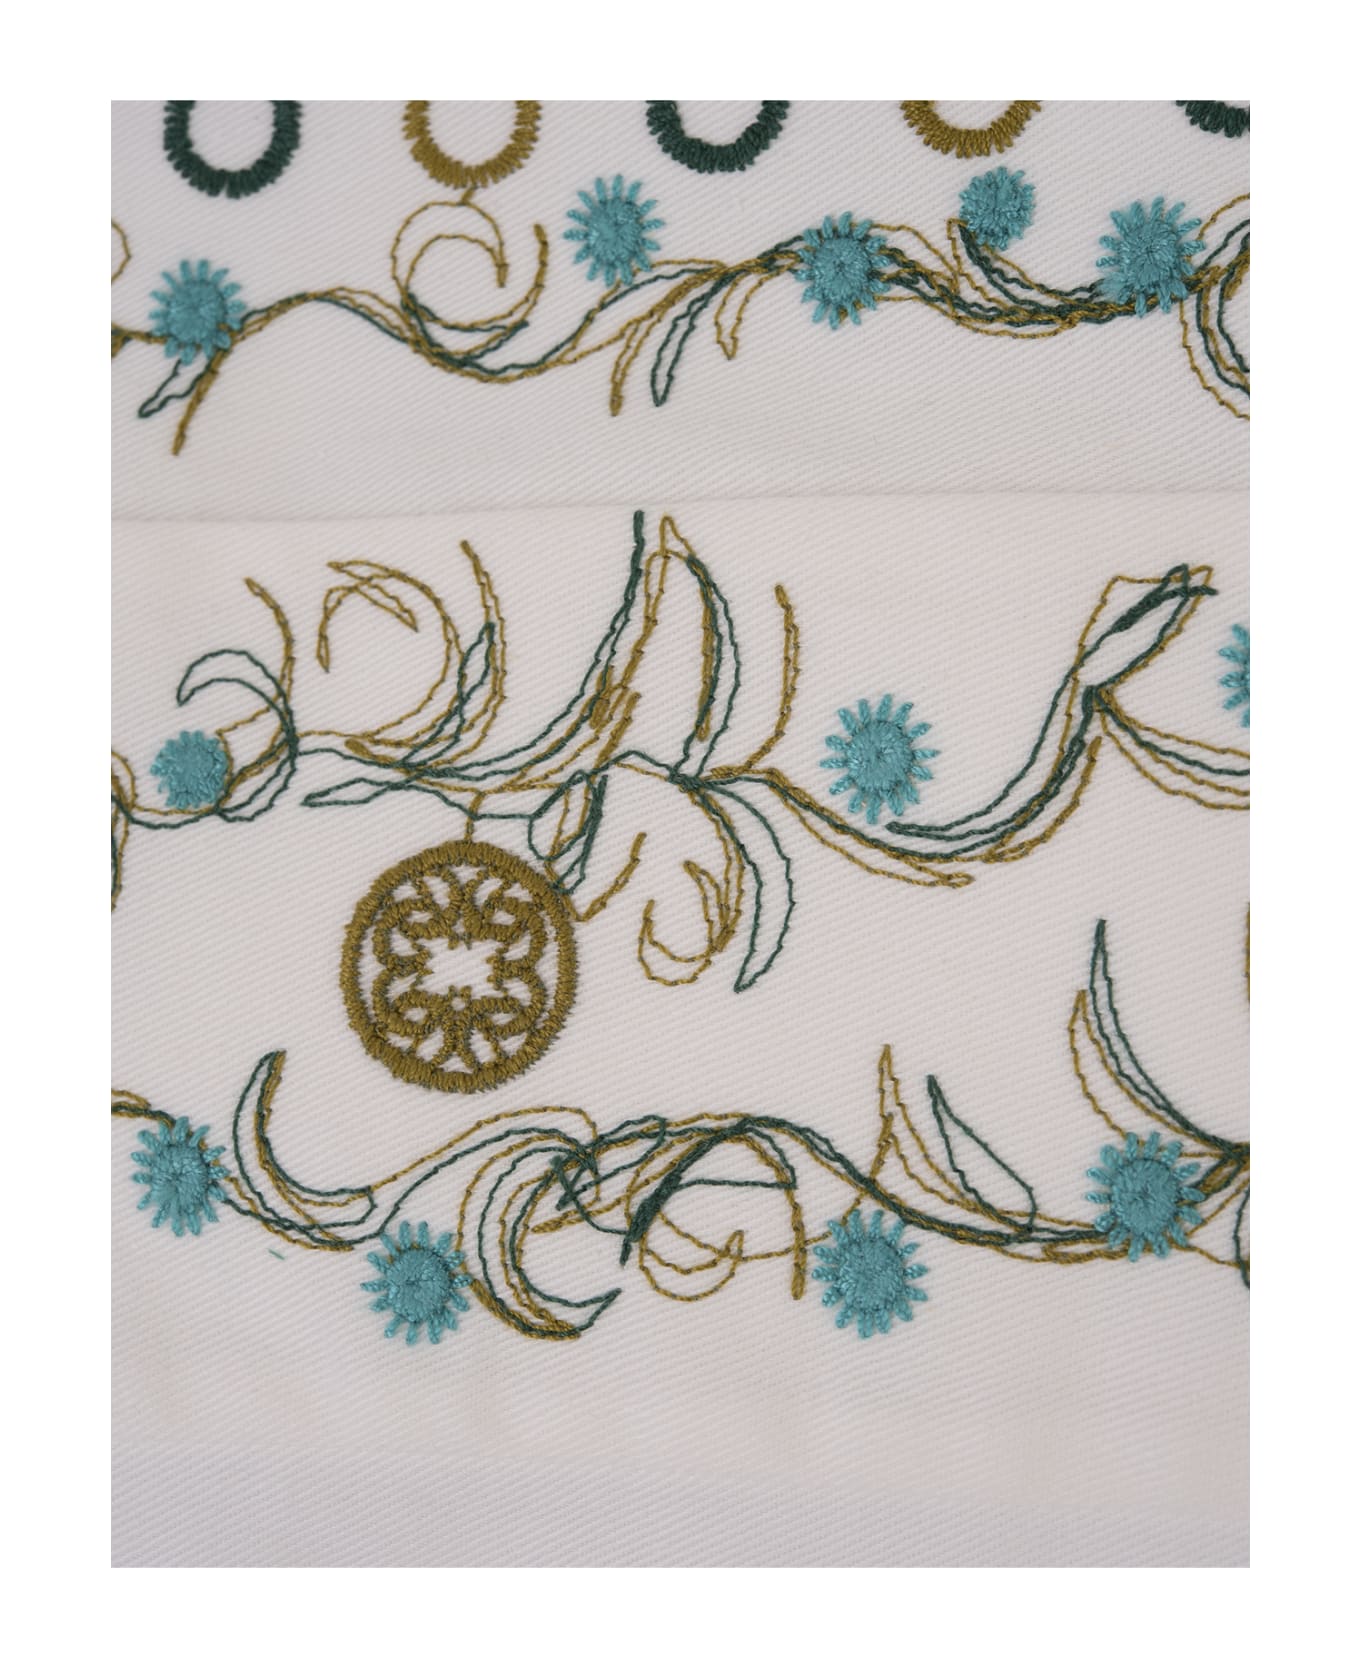 Elie Saab Cotton Embroidered Garden Top - Multicolour